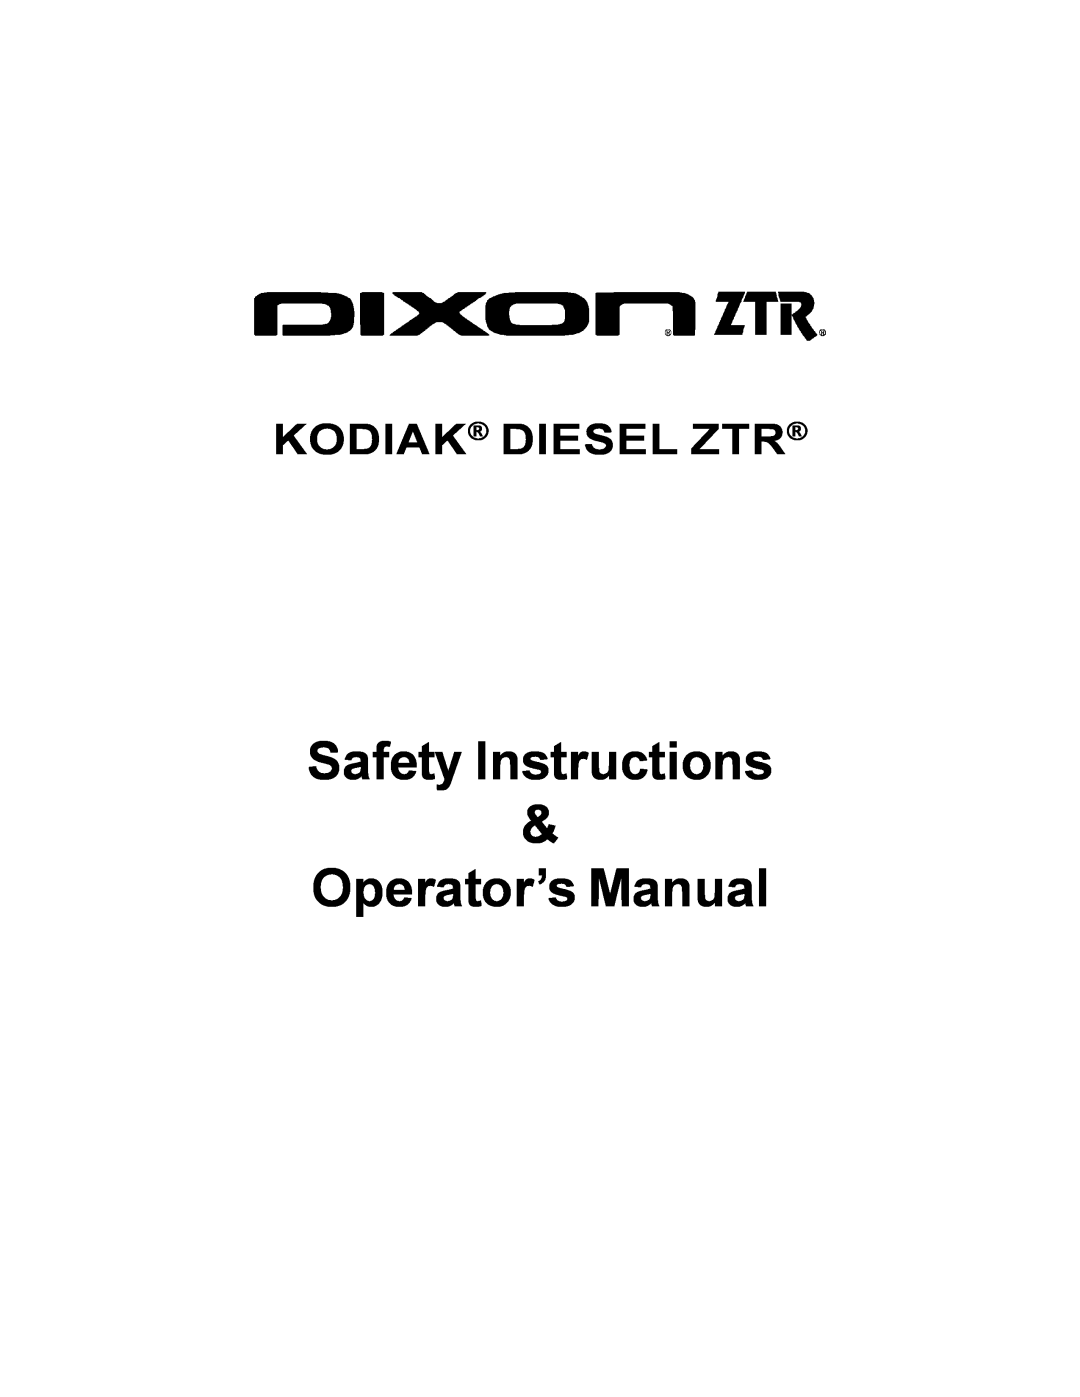 Dixon 18626-106 manual Safety Instructions, Operator’s Manual, Kodiak Diesel Ztr 